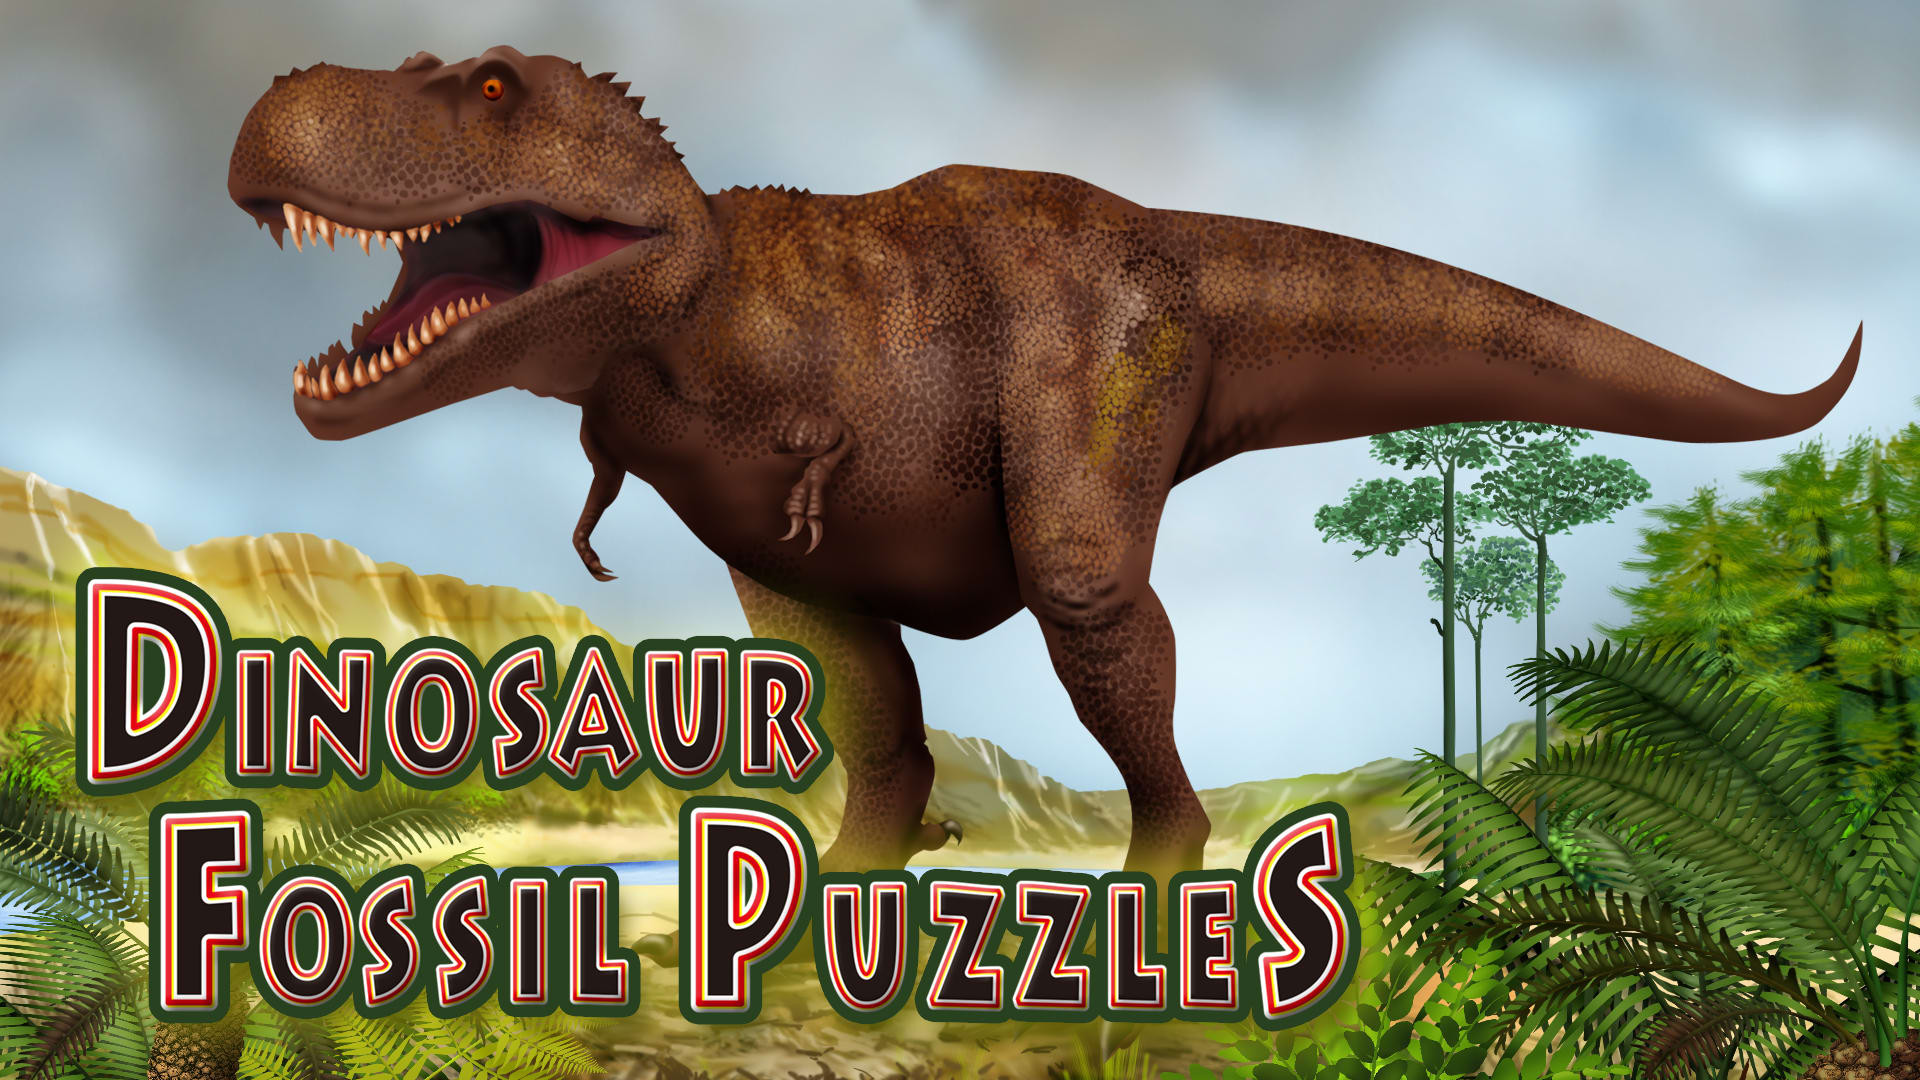 Dinosaur Fossil Puzzles